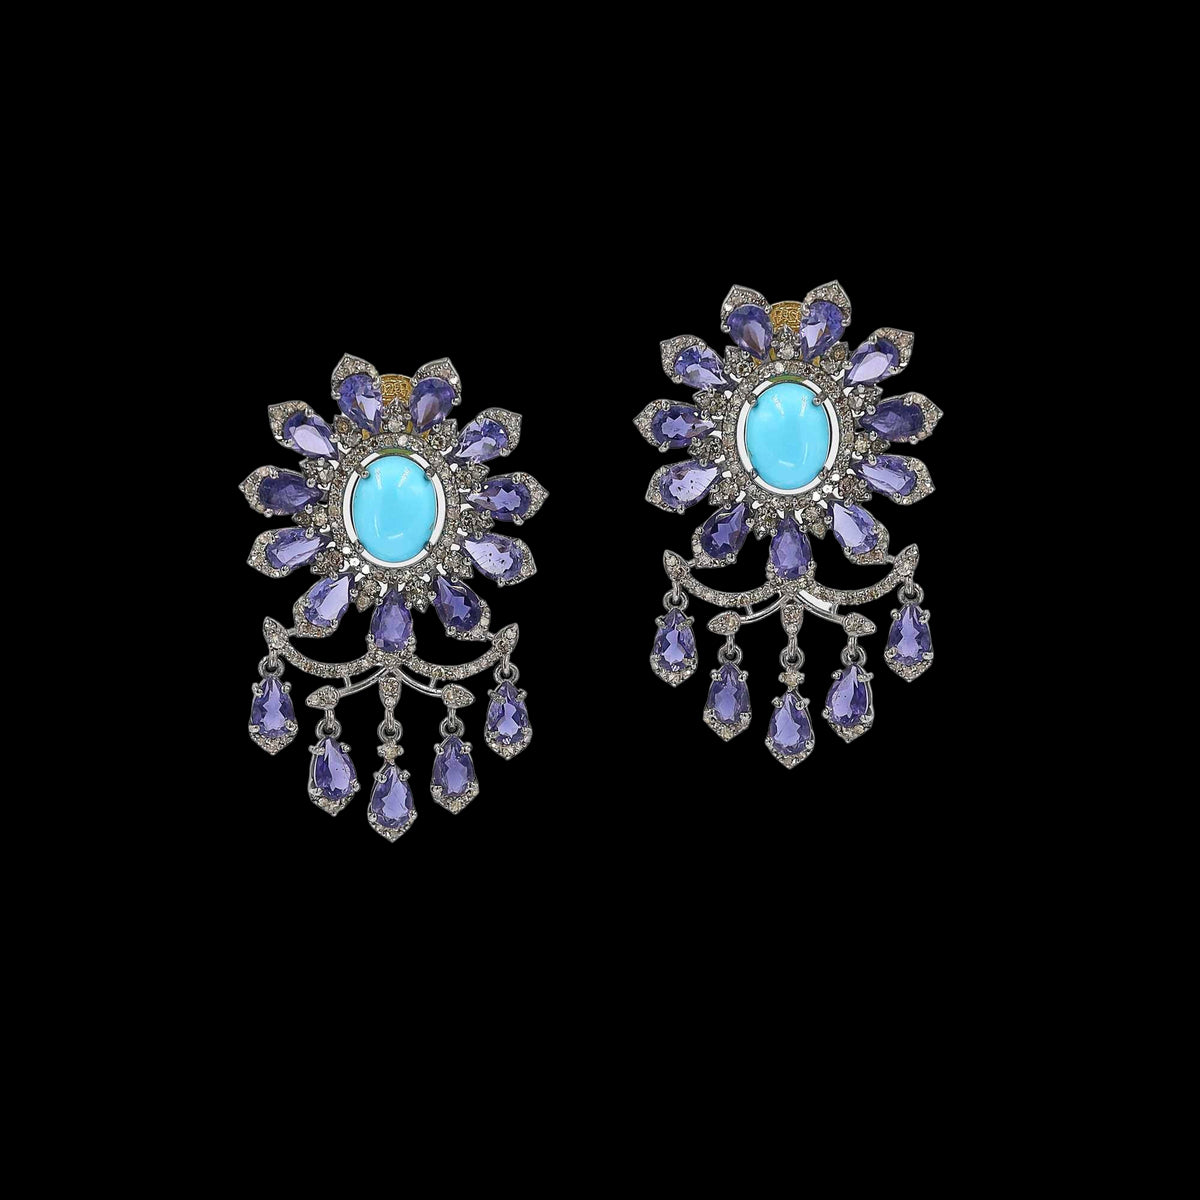 Vrishti Diamond, Turquoise, and Iolite Earrings